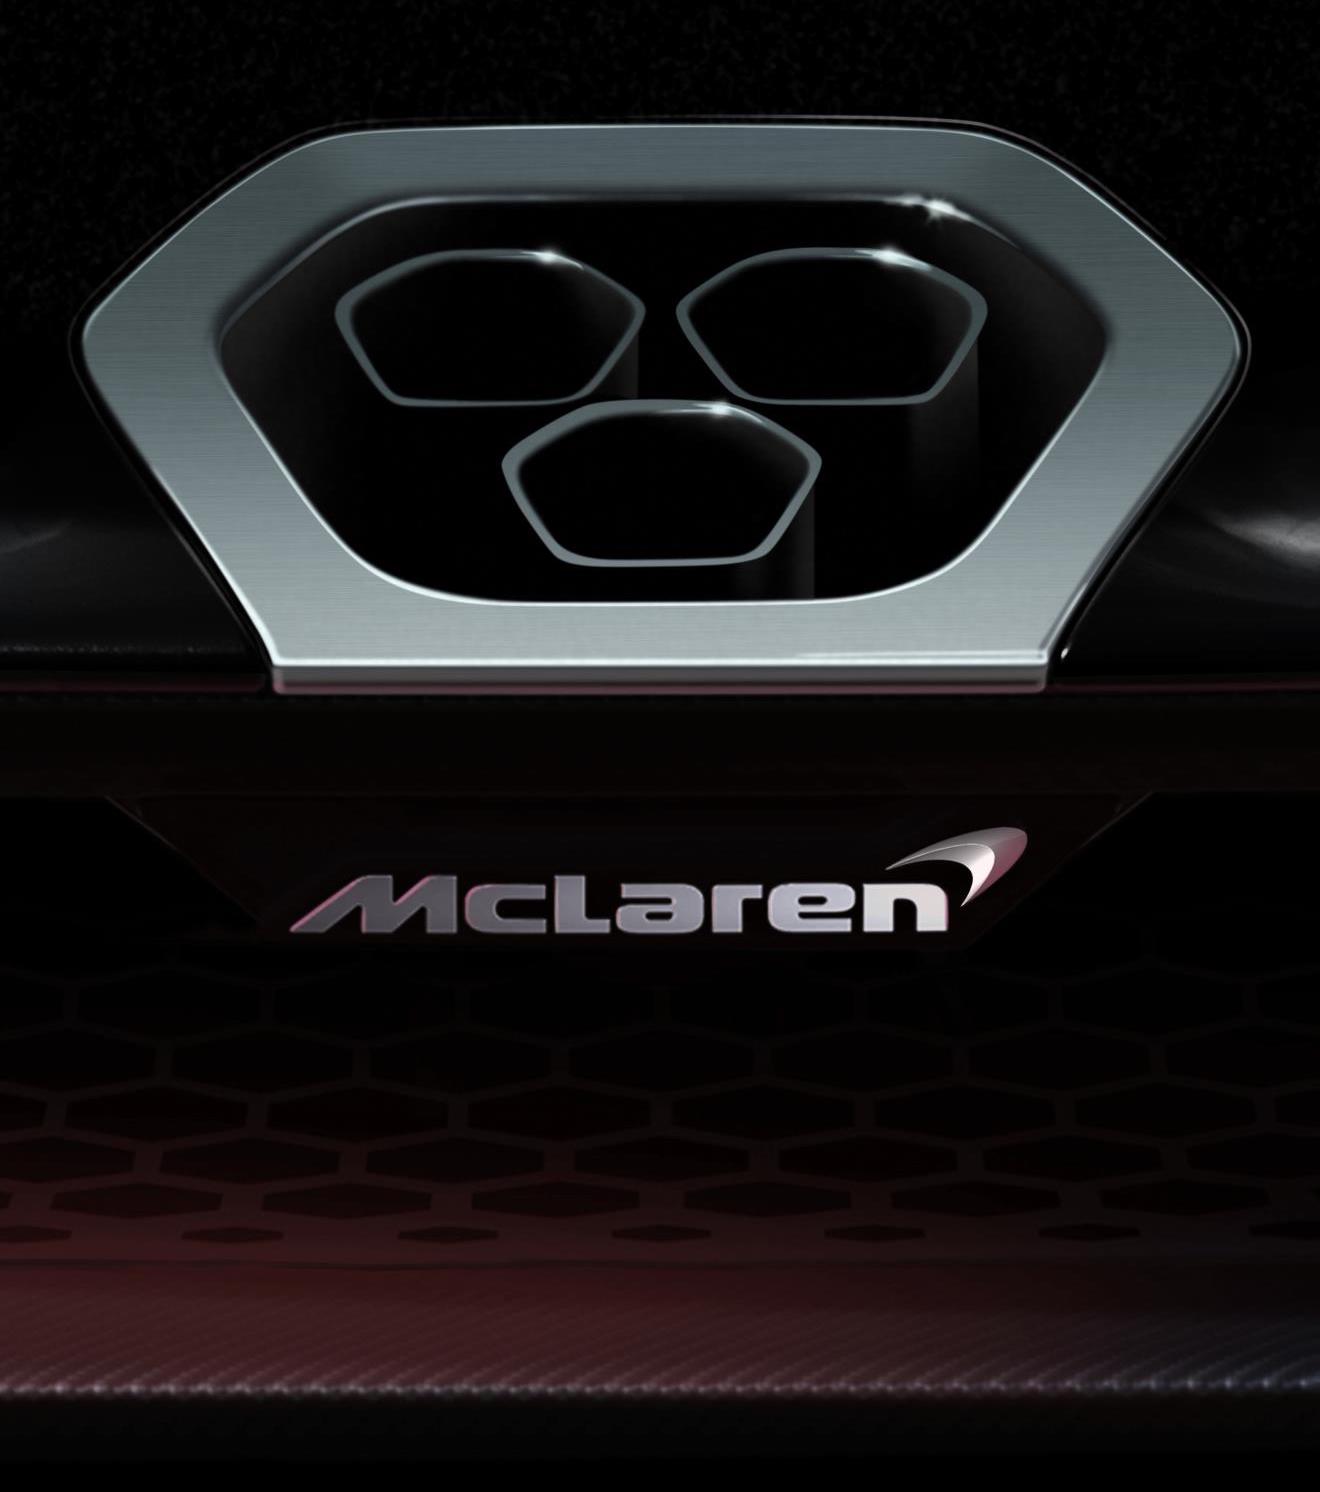 McLaren confirms ultimate road-legal track car is coming